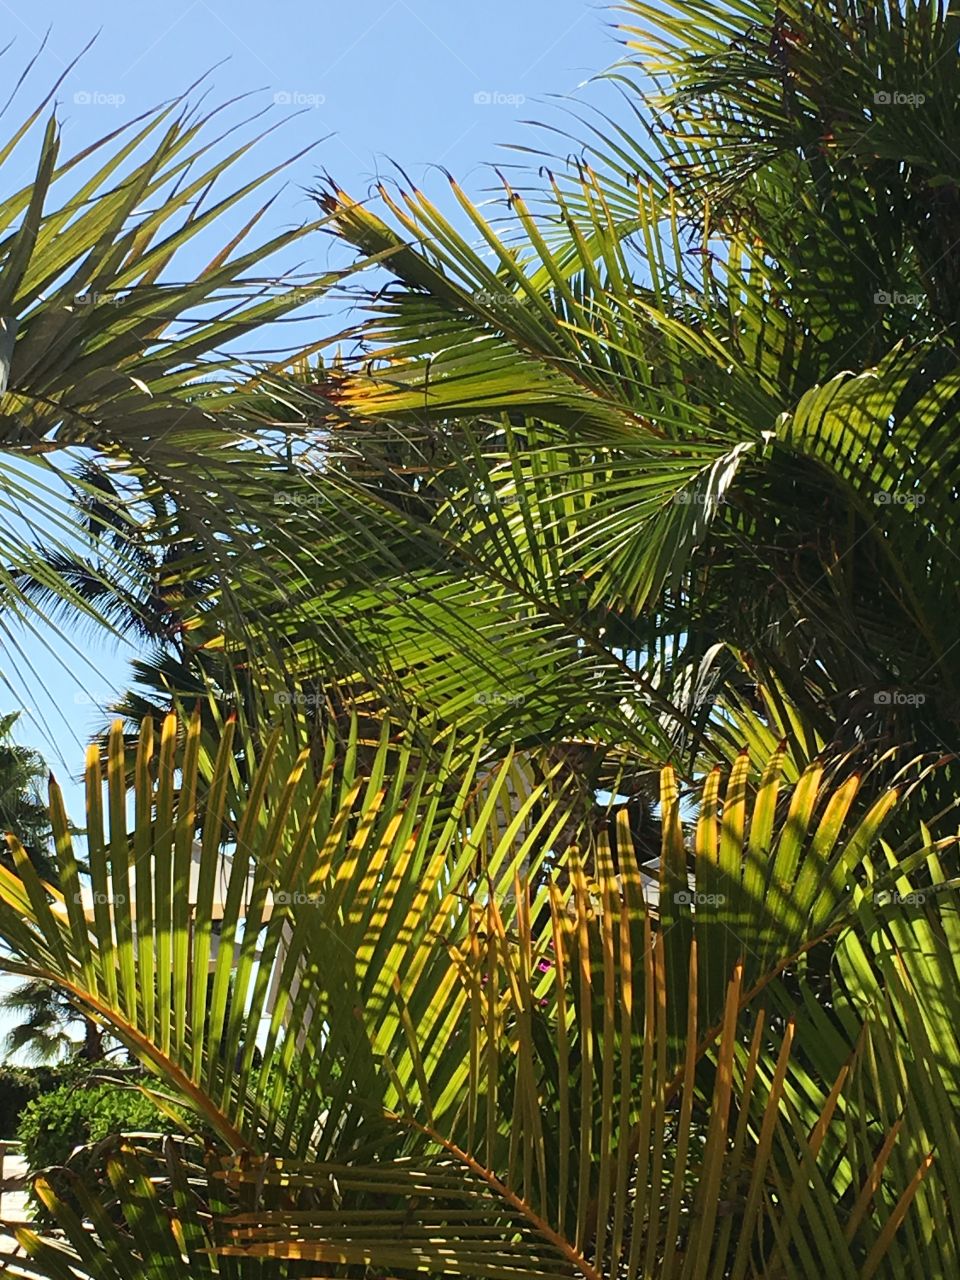 Breezy, lush palm leaves.